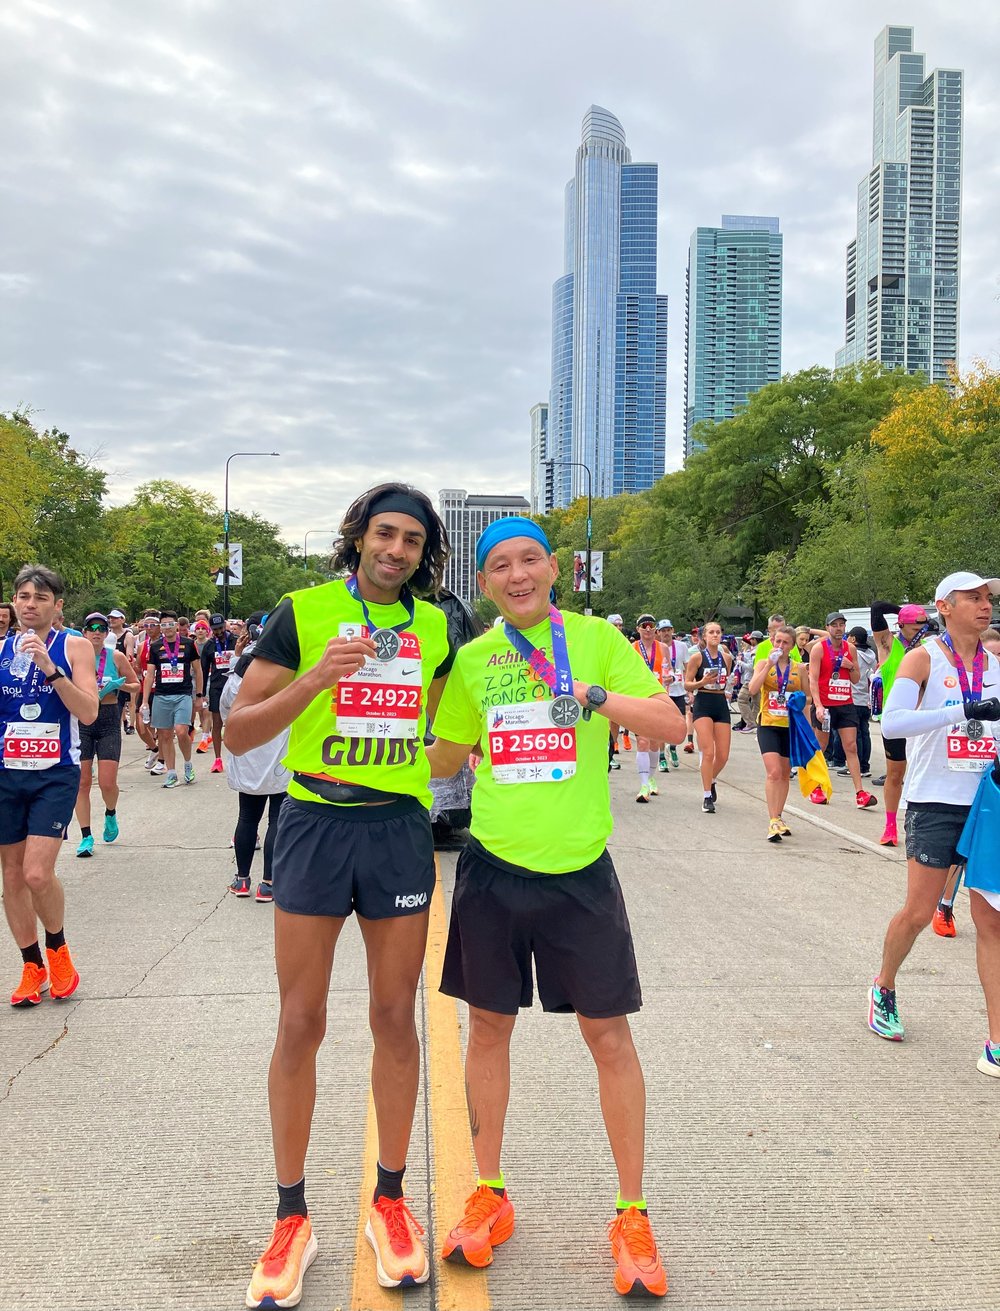  Raj Pannu and Achilles athlete Batzorig “Zoro” Baasai posing with their Chicago Marathon medals 